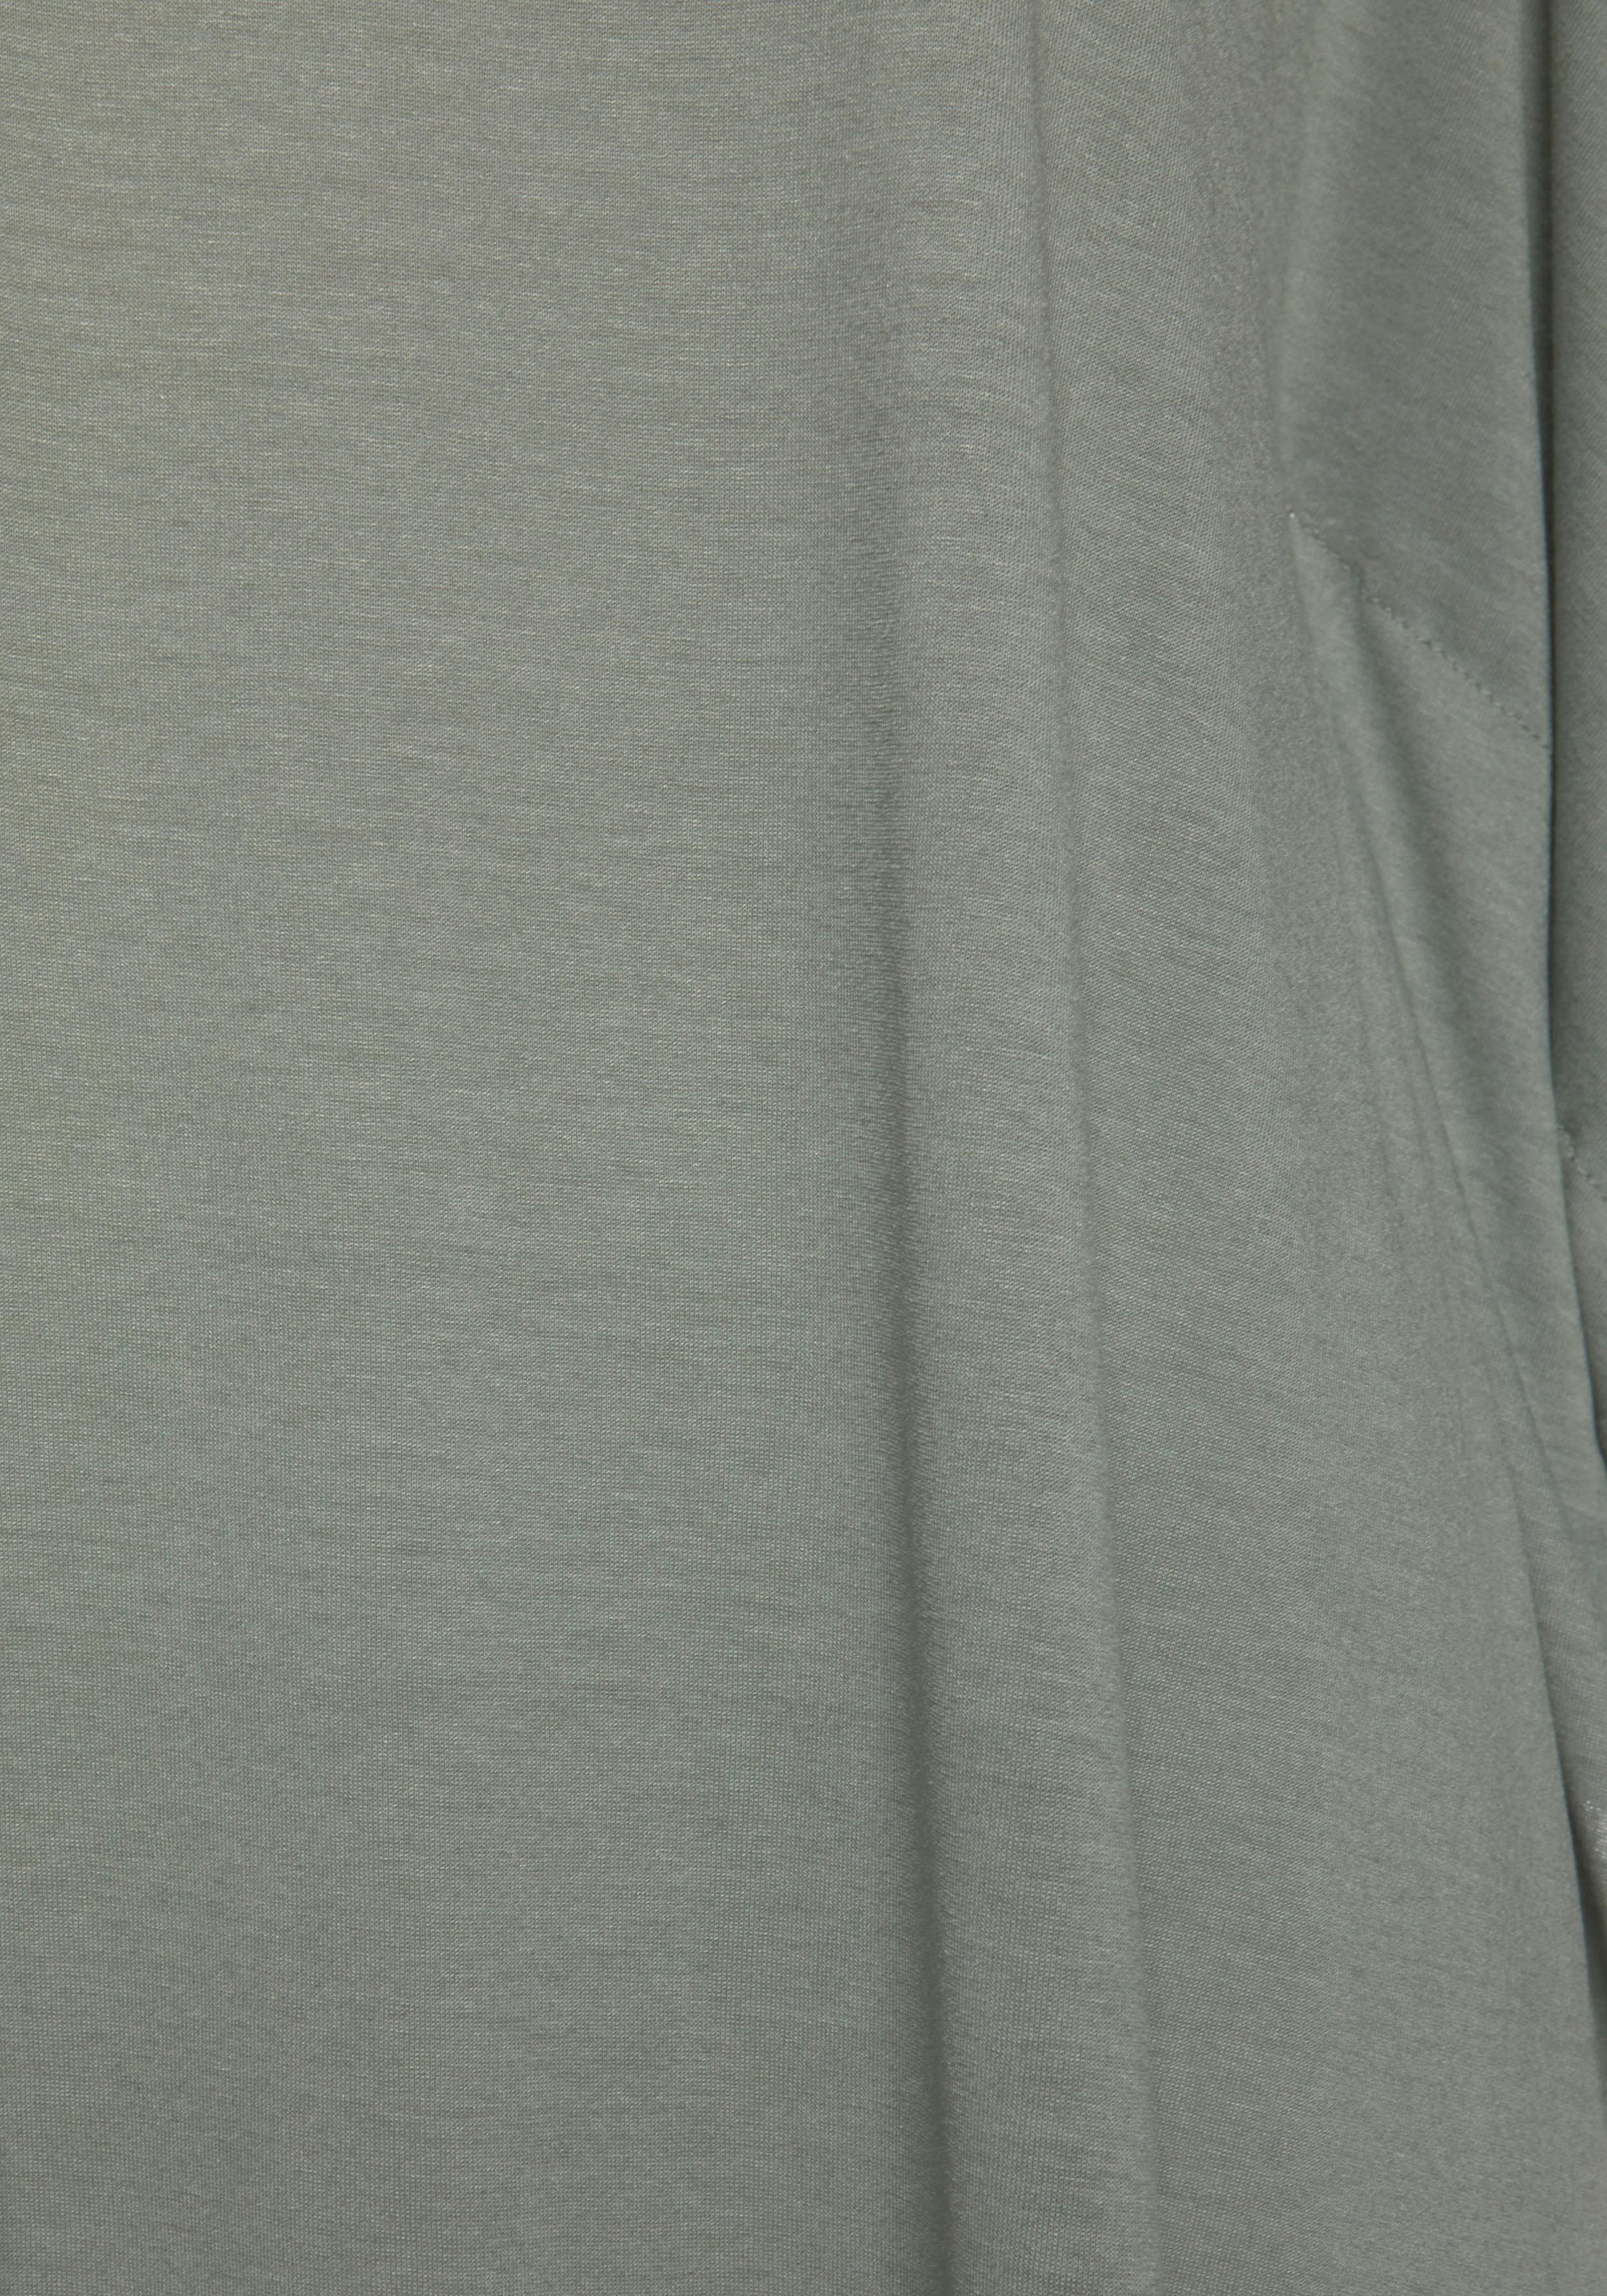 LASCANA Strandshirt, mit Zierband im Rücken, schulterfrei oberen Longshirt, bestellen 3/4-Ärmel